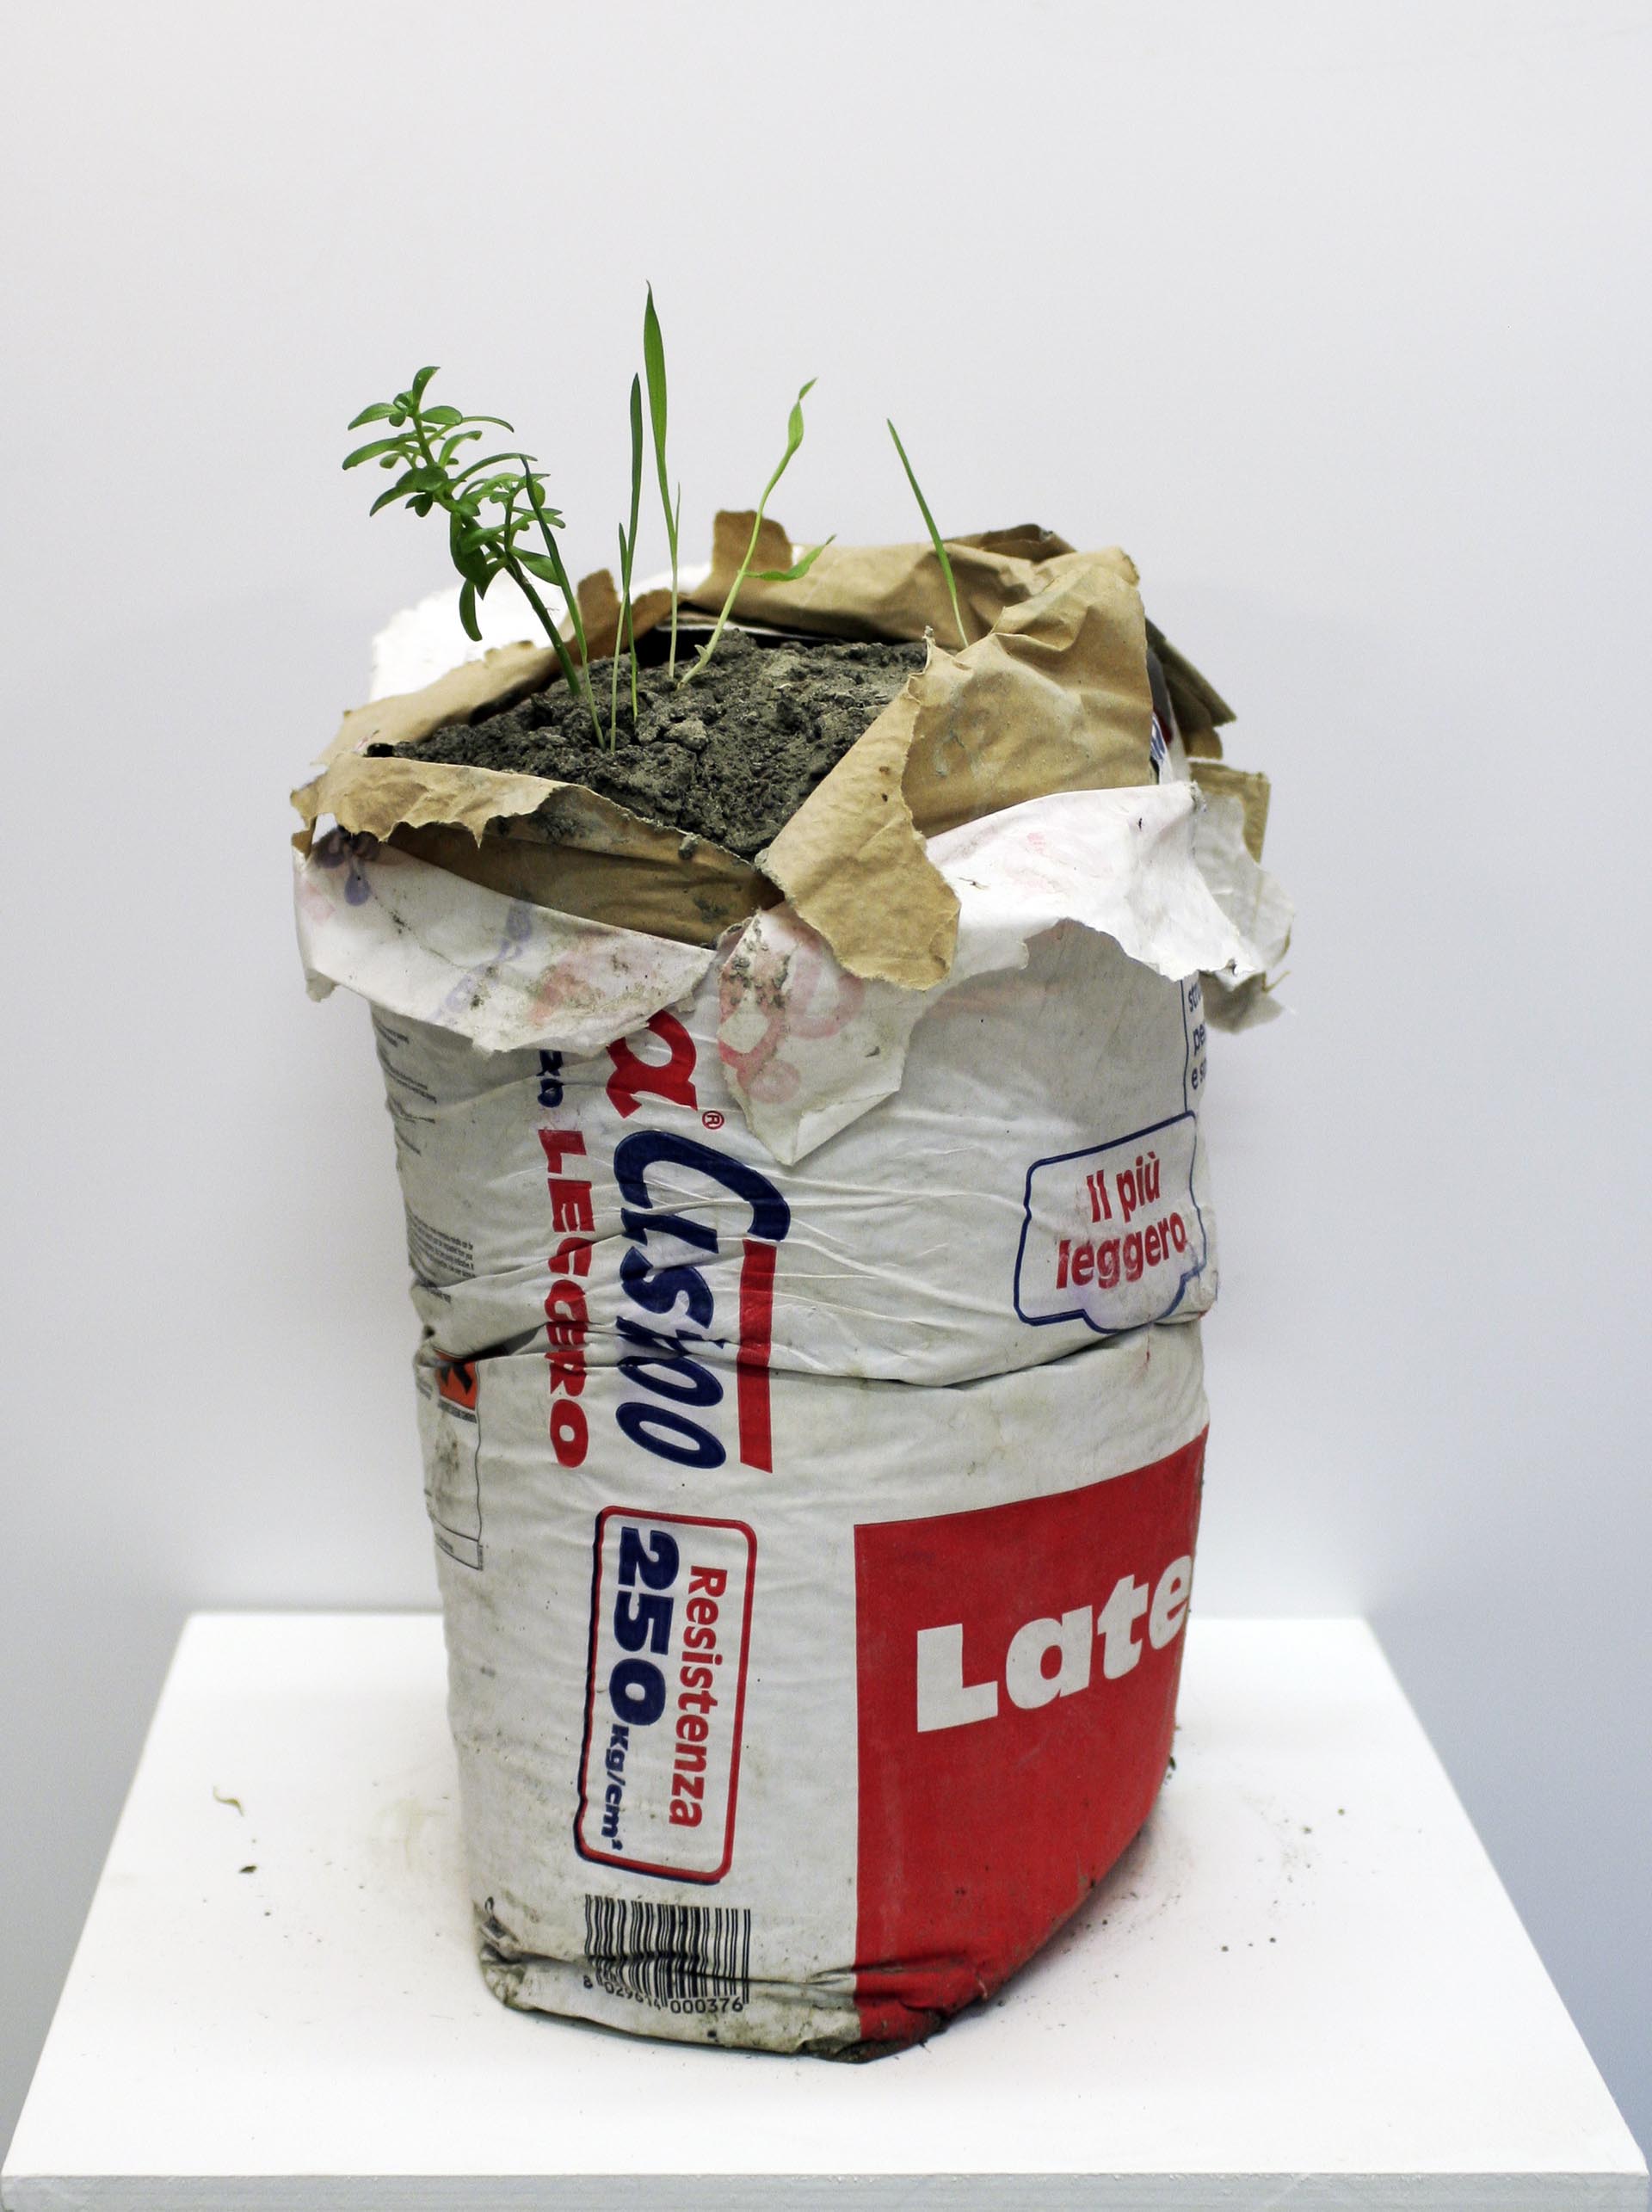 Performance of a plant - 2013, concrete bag and spontaneous plant